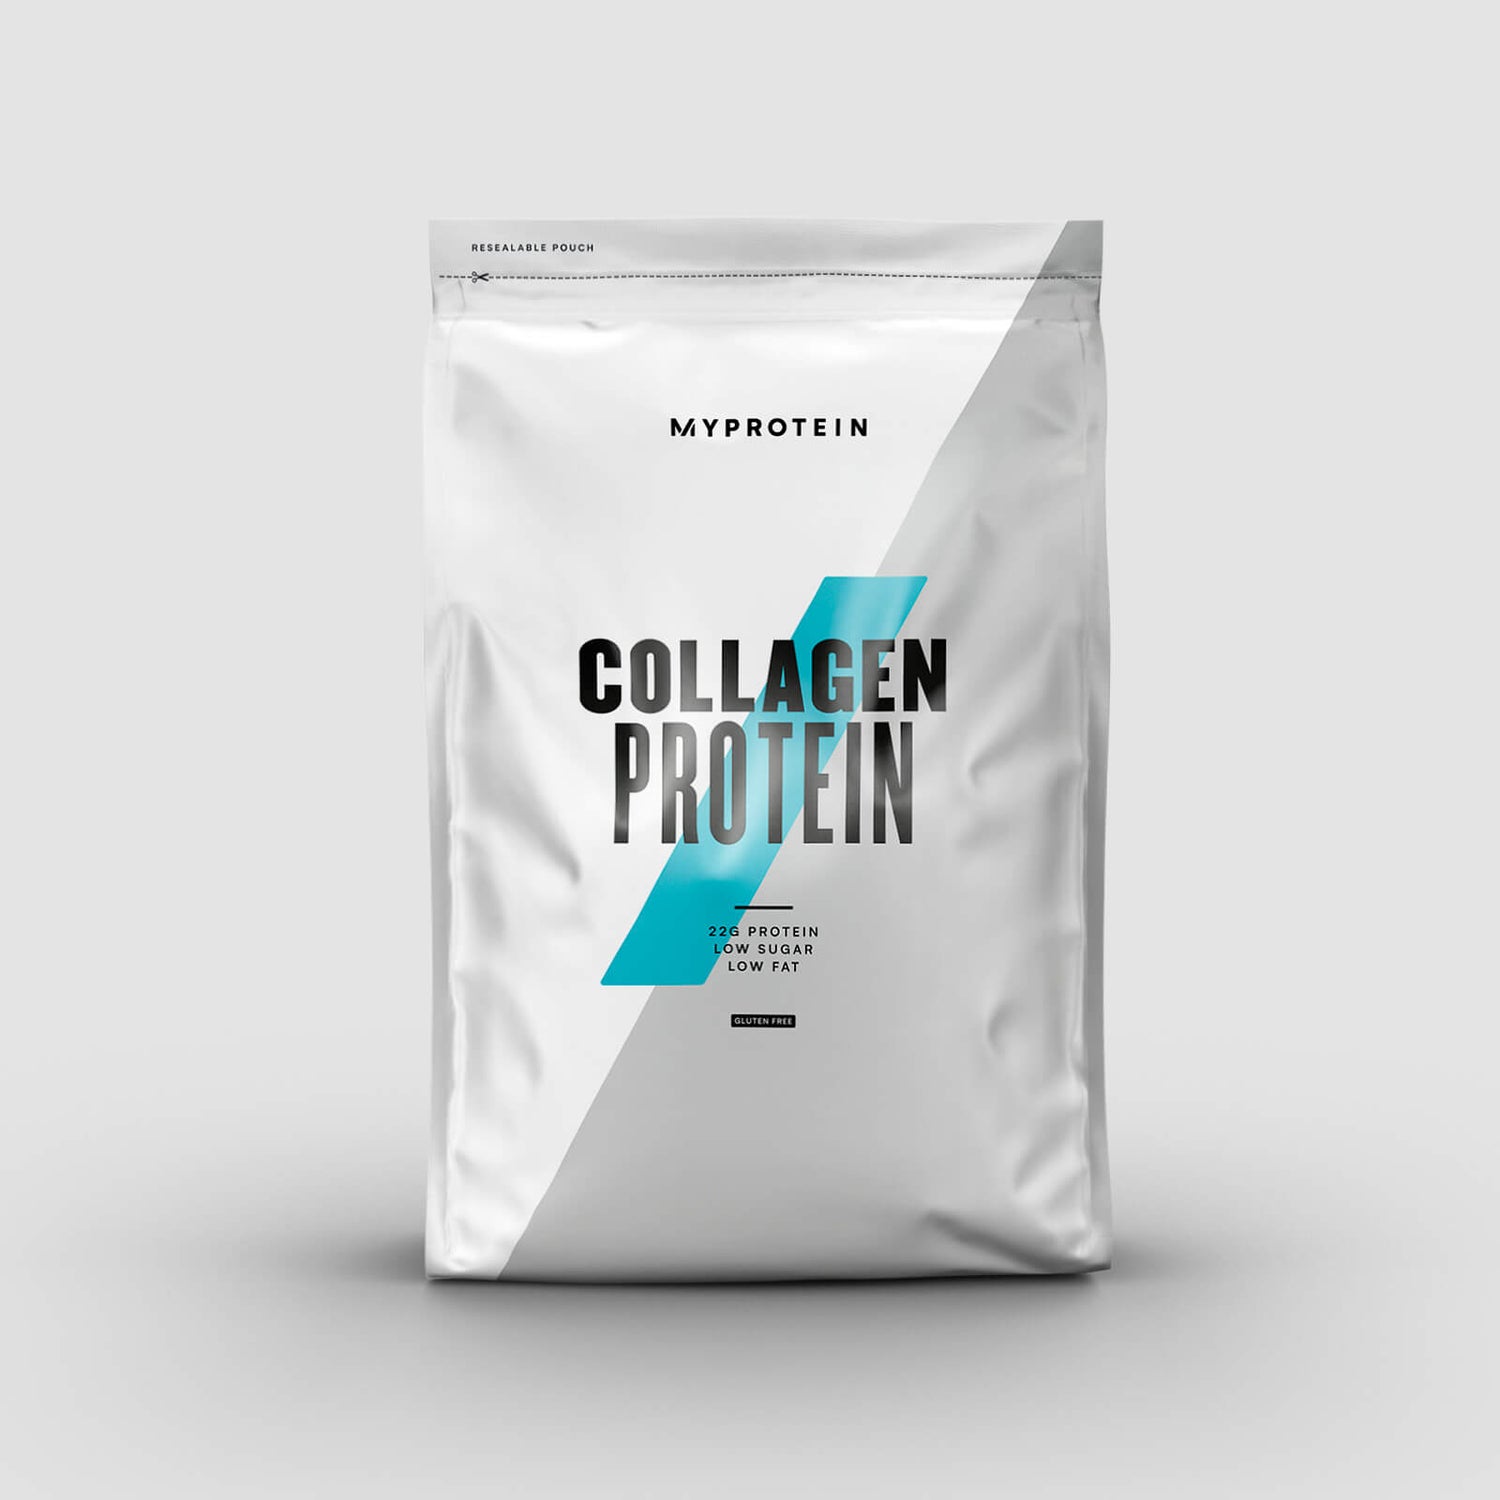 Proteină din colagen - 2.5kg - Capsuni